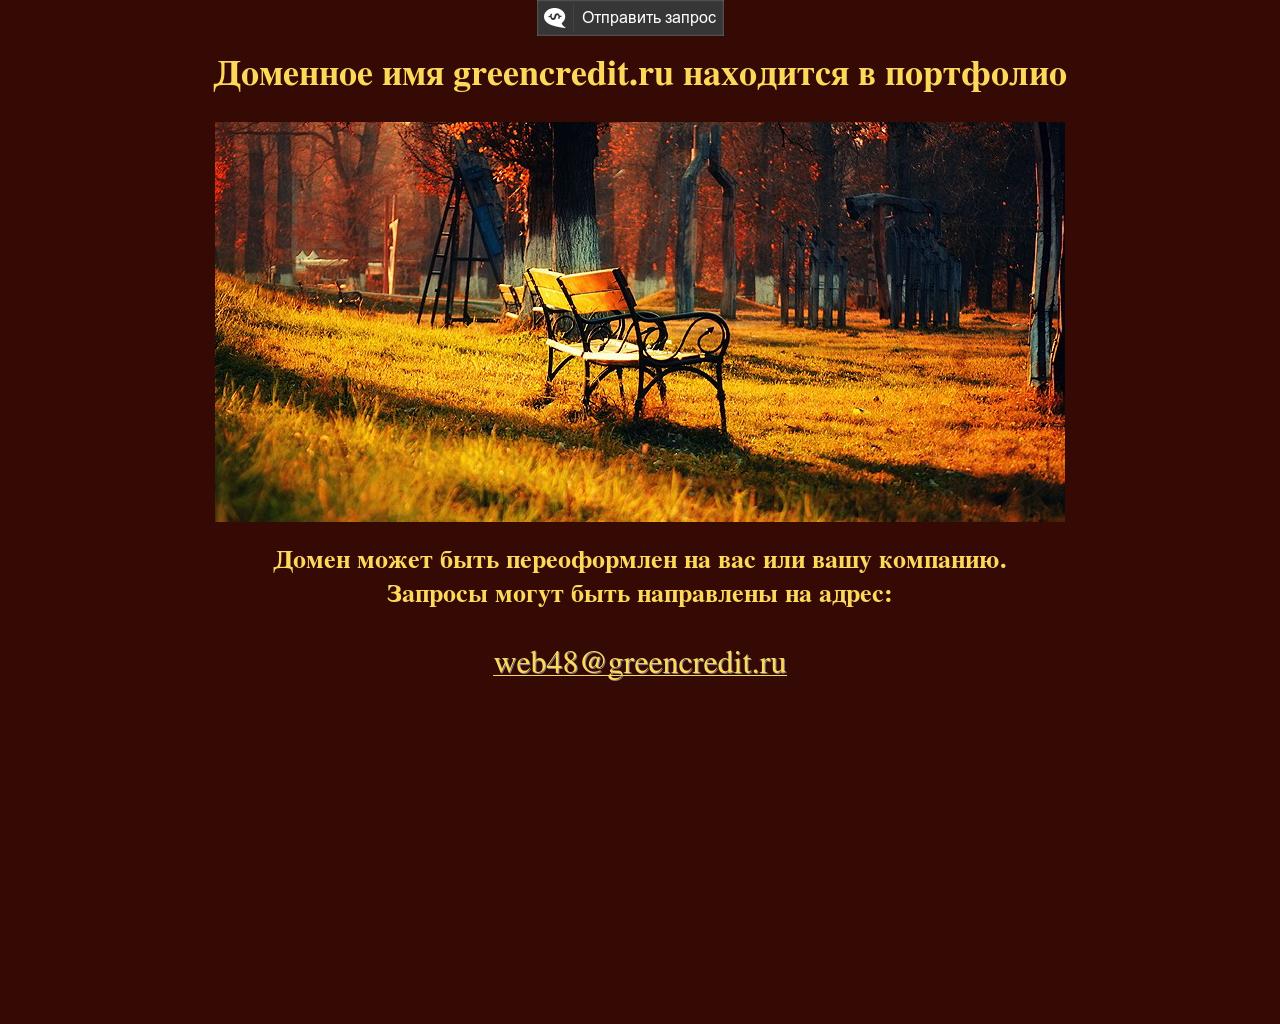 Изображение сайта greencredit.ru в разрешении 1280x1024